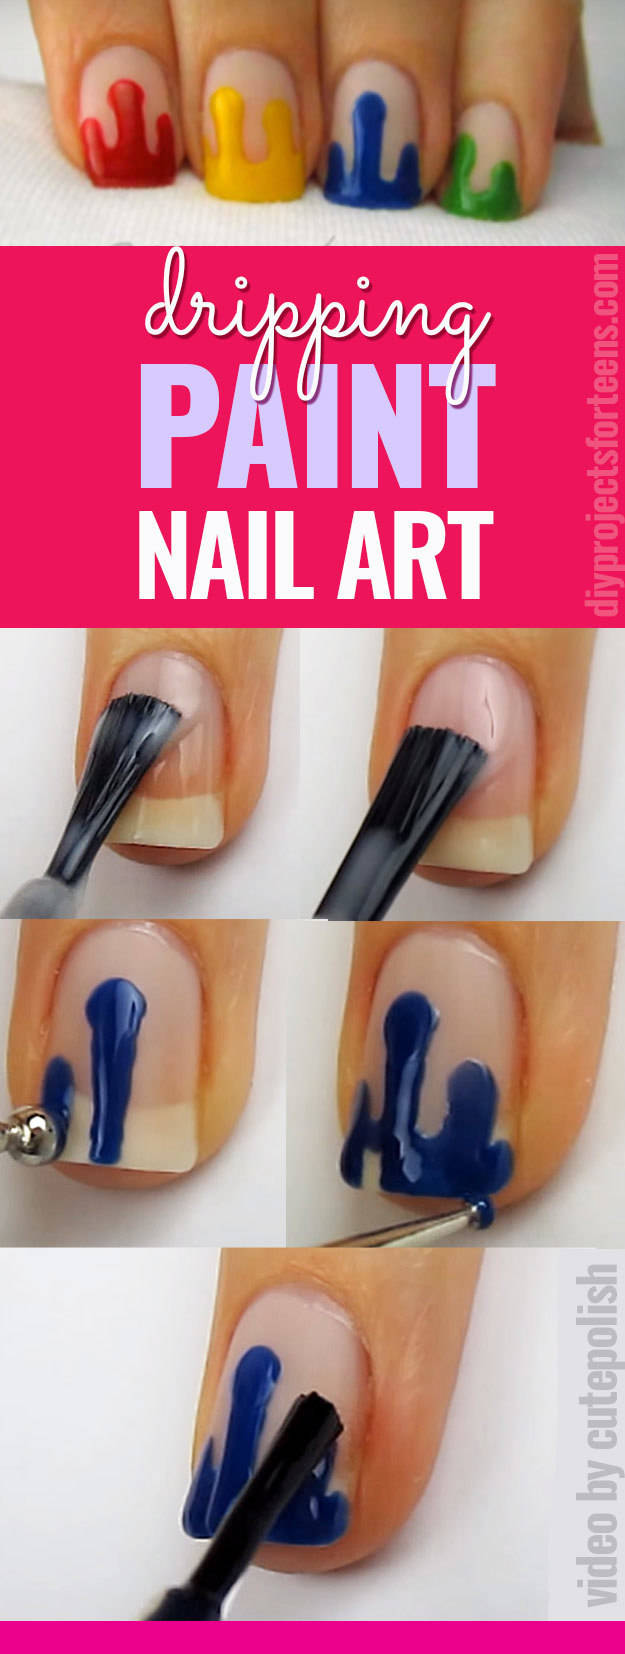 1453303510 dripping paint nail art ideas